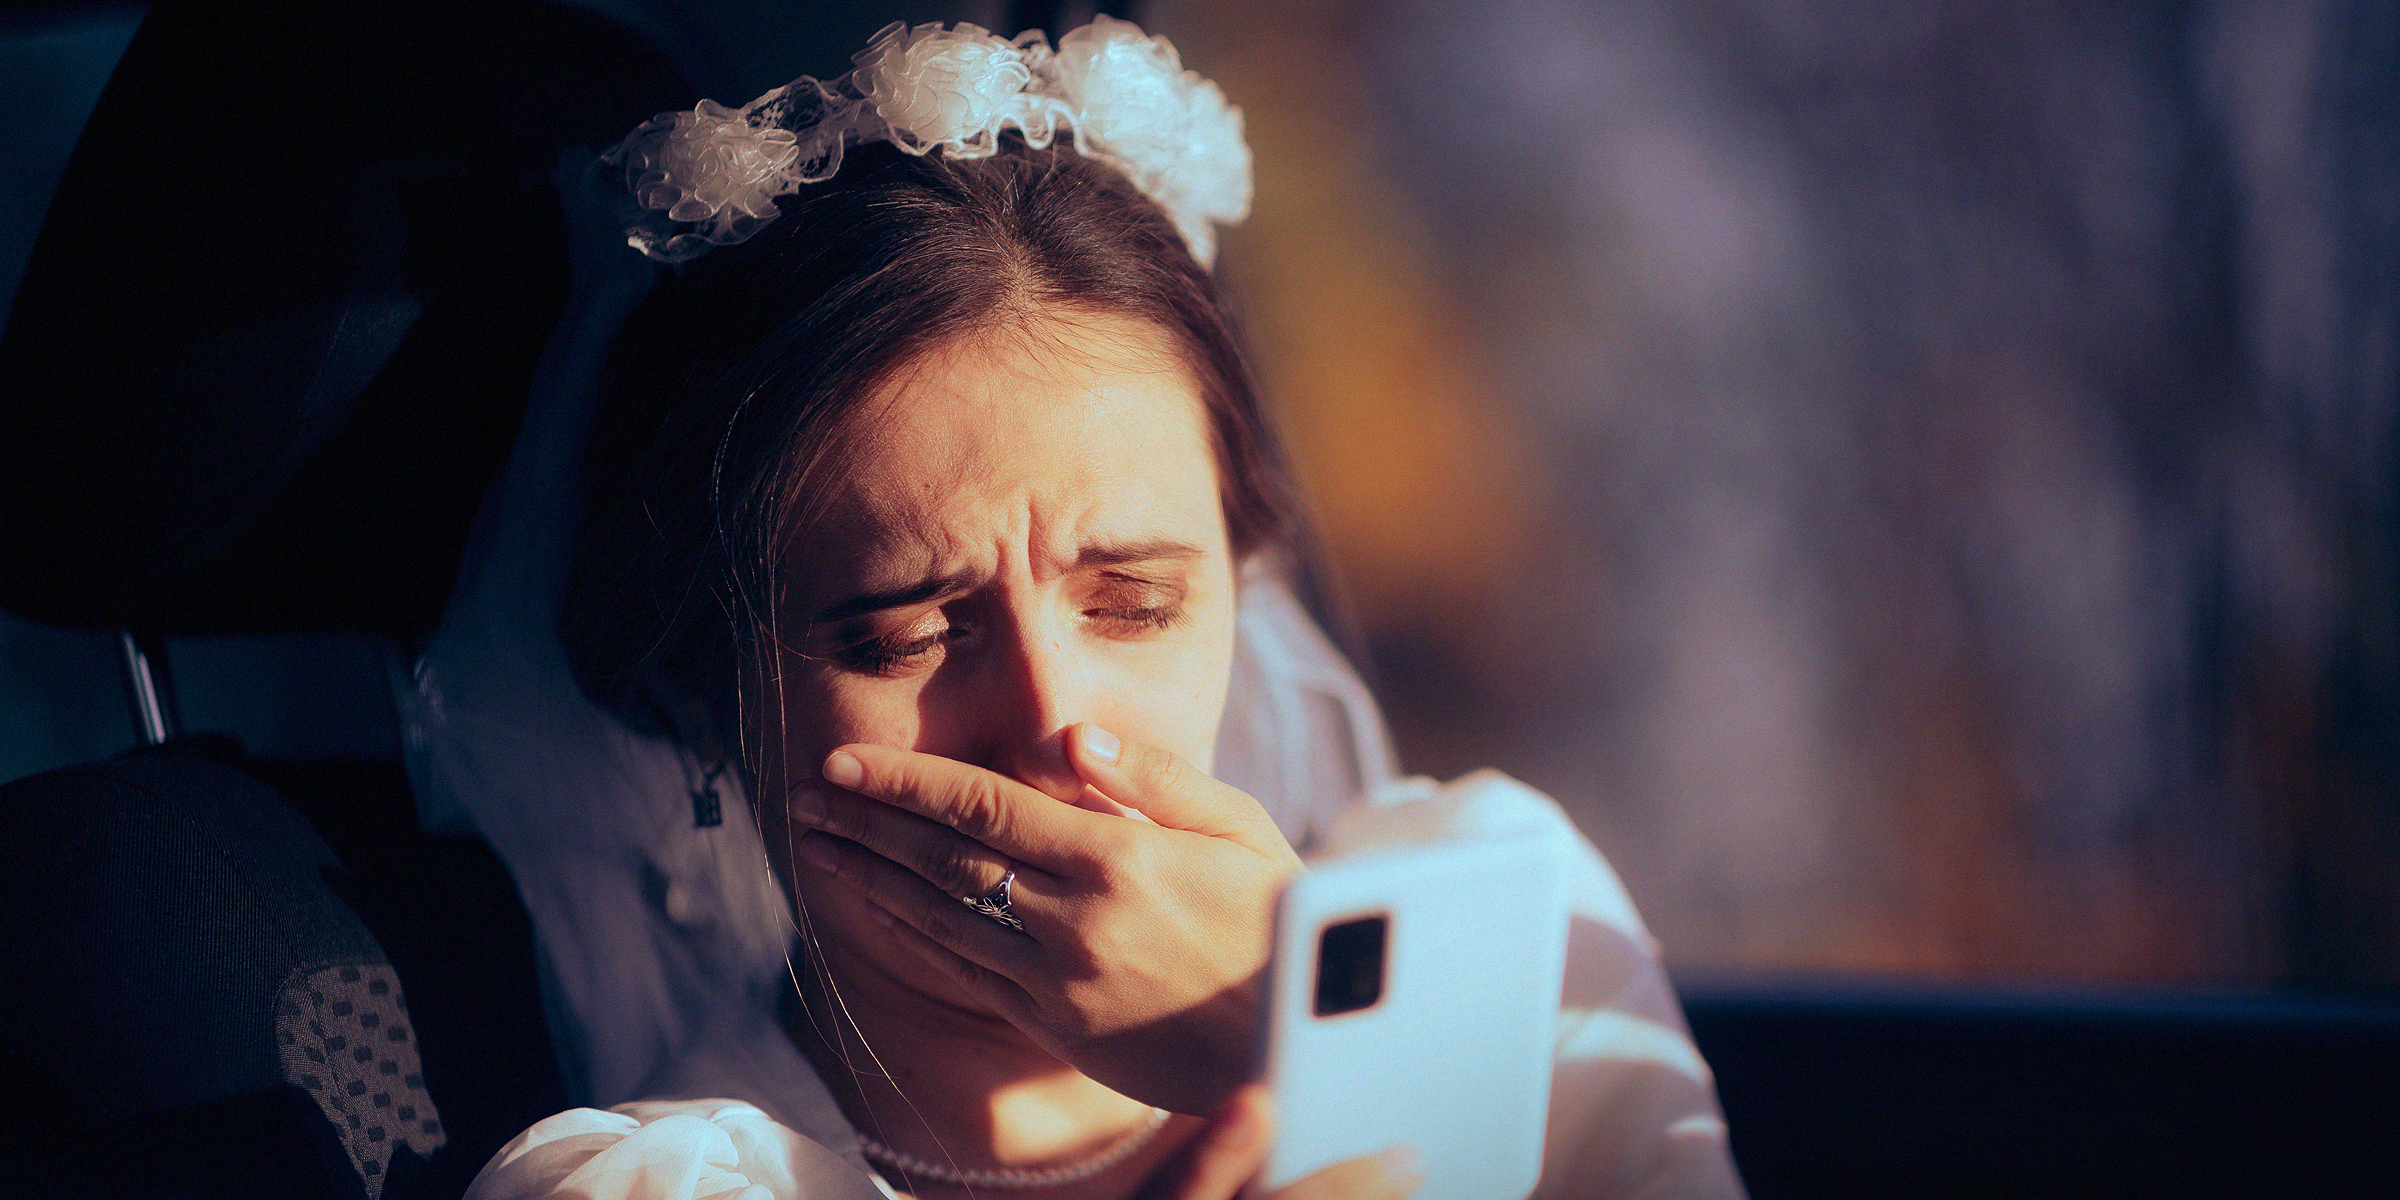 Une mariée choquée qui regarde son téléphone | Source : Shutterstock